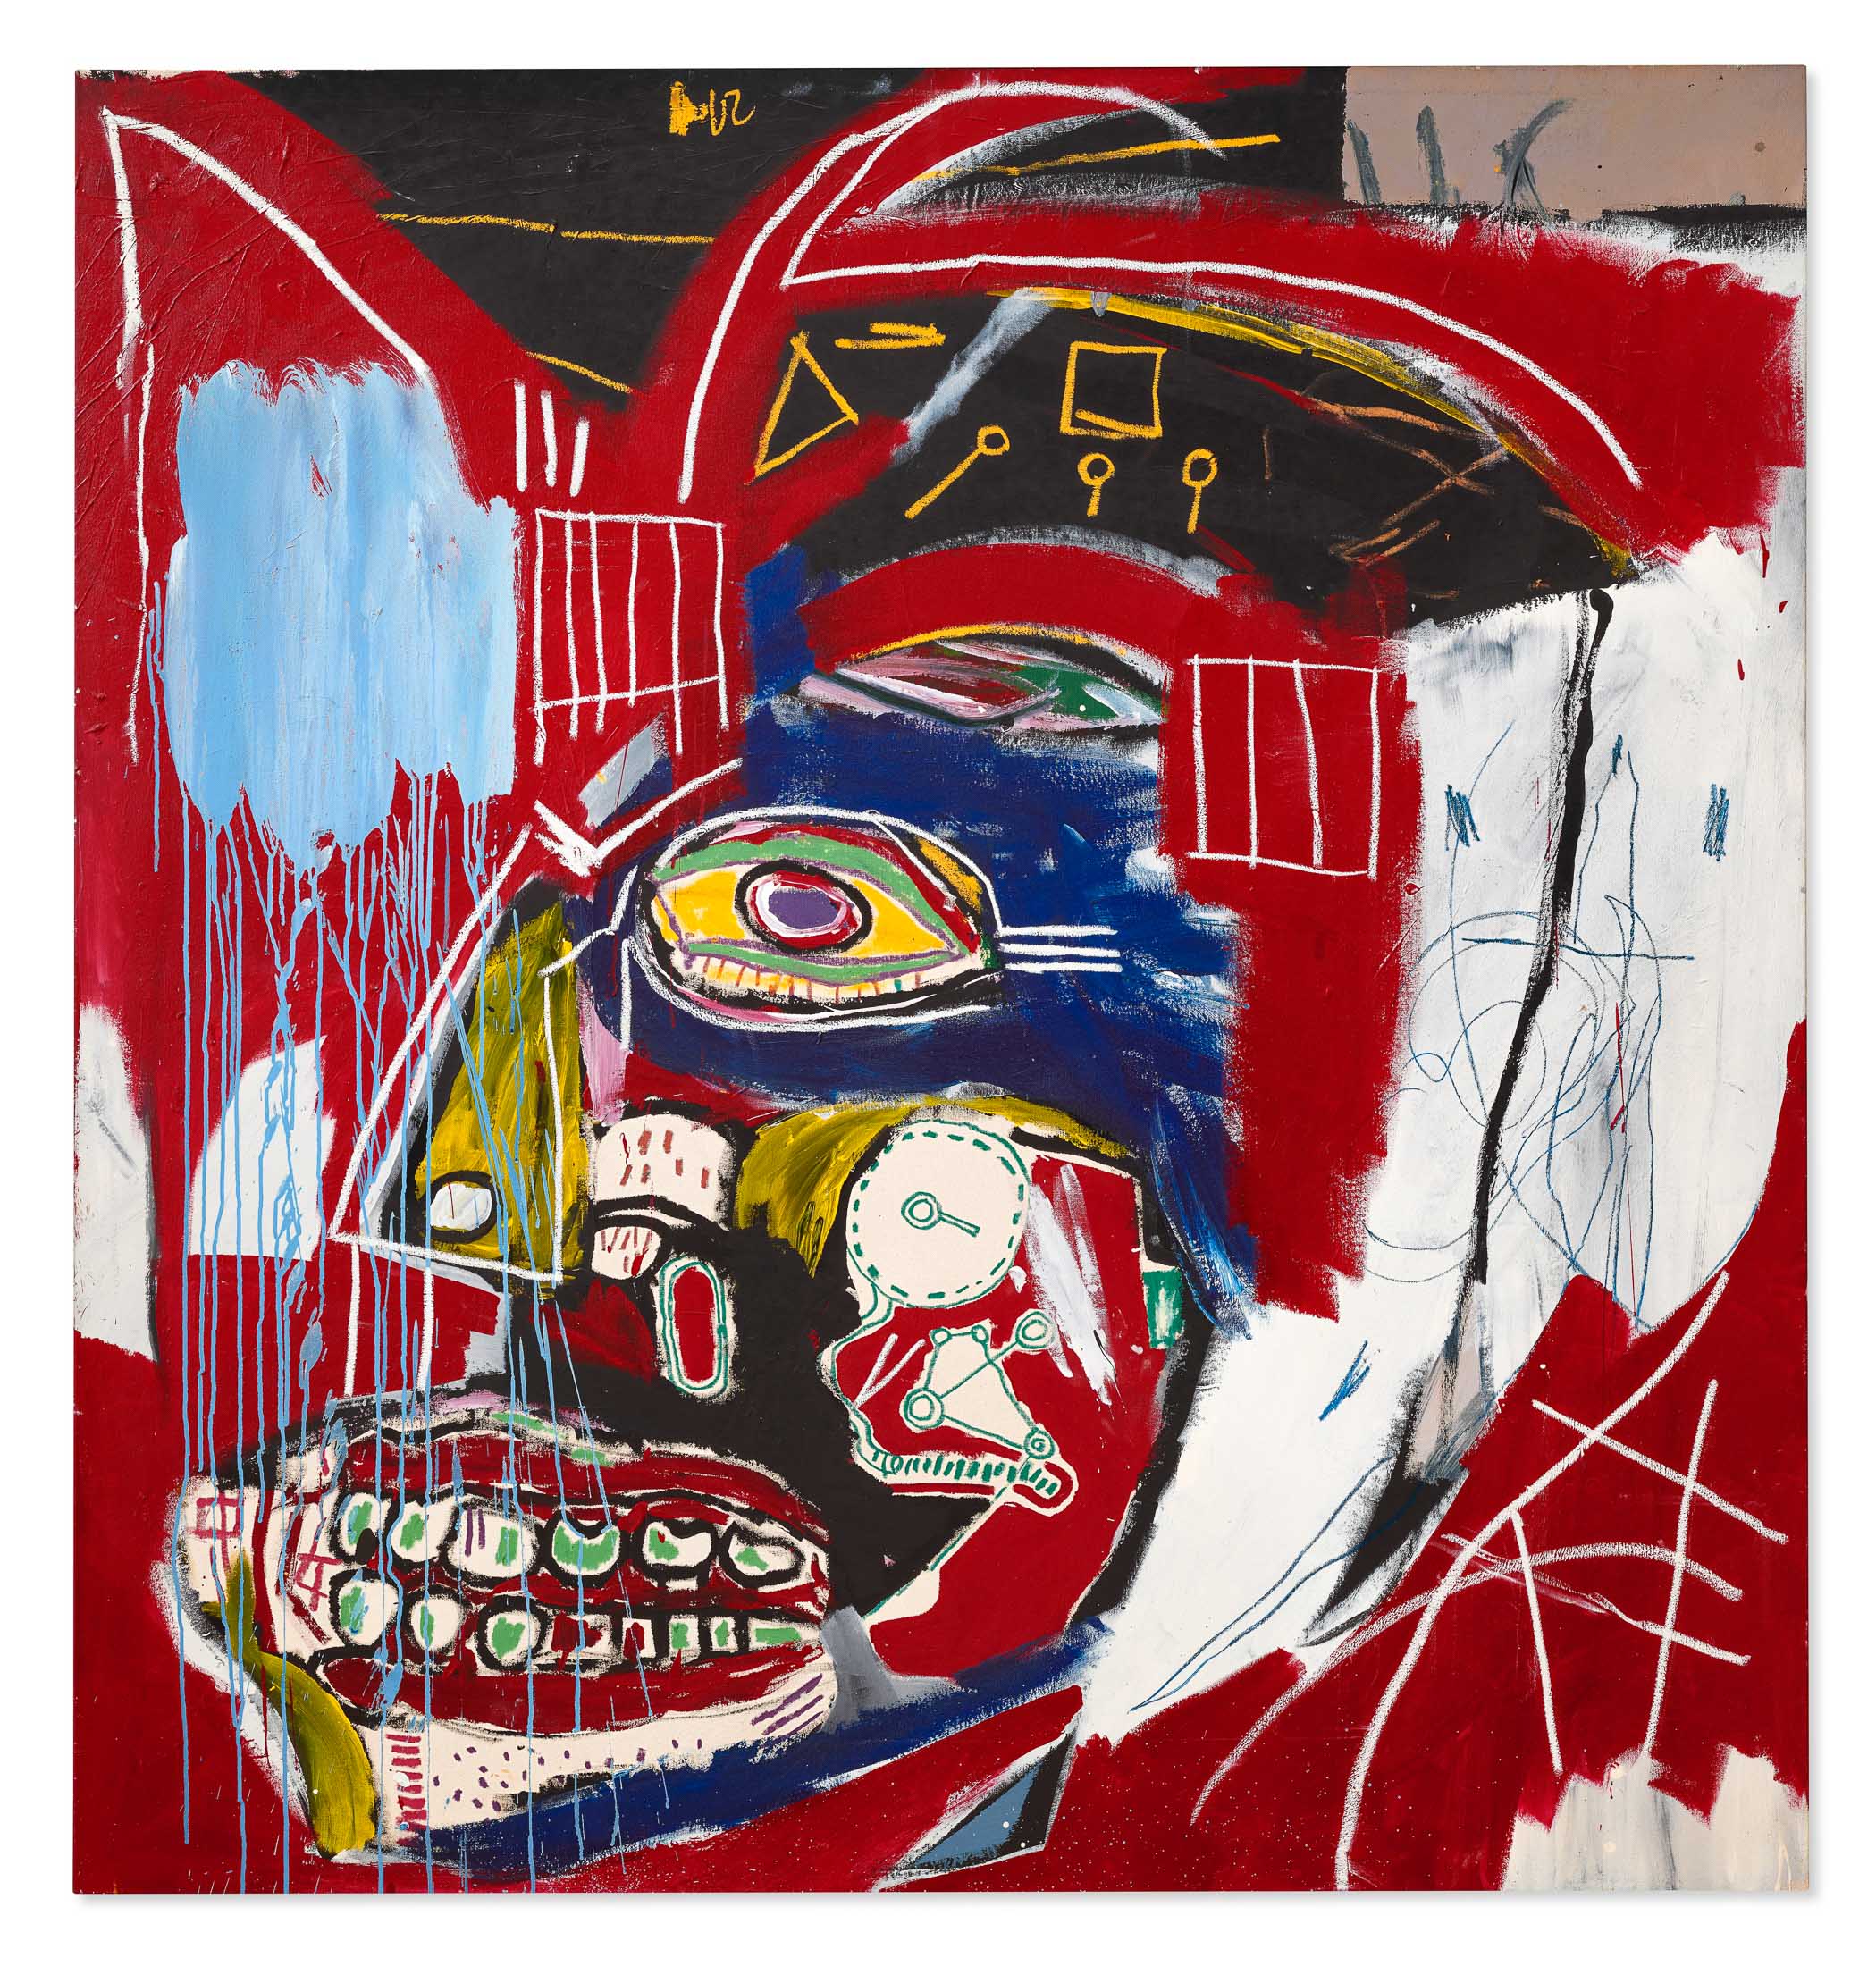 Raffinere Summen ventil Billionaires Pump Up Basquiat With $93.1 Million Christie's Sale - Bloomberg